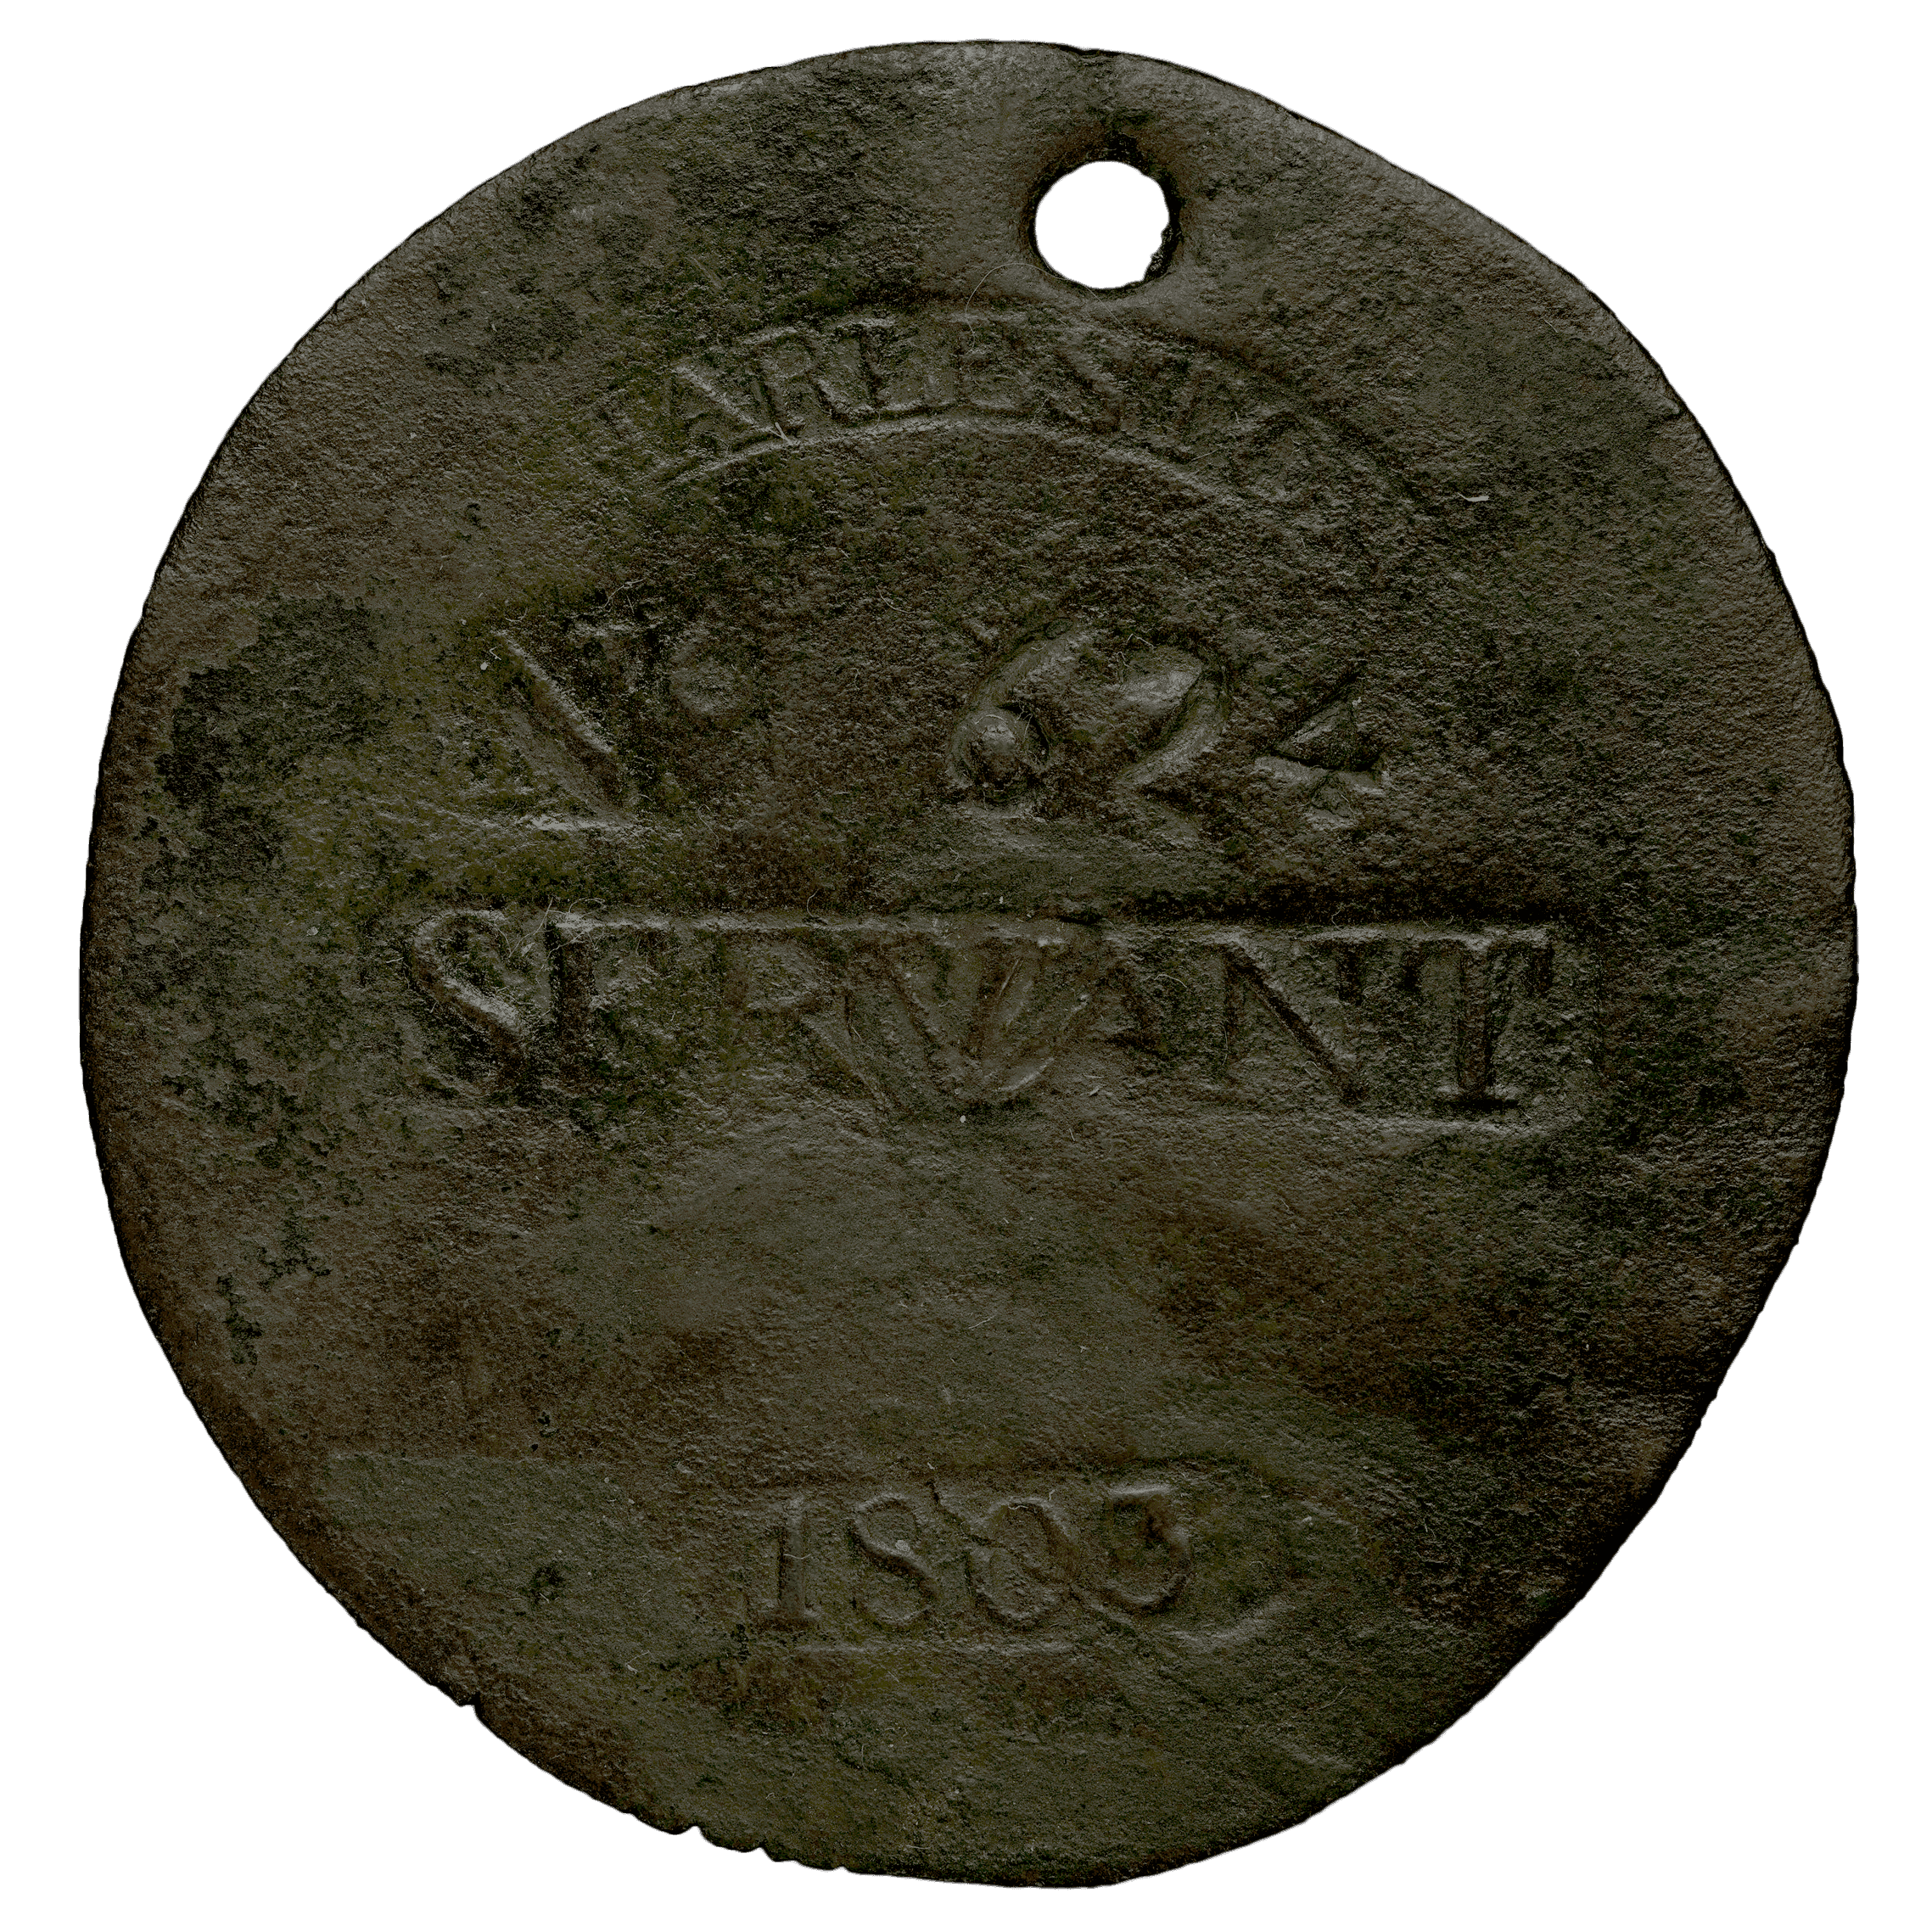 Round, metal badge with "CHARLESTON No. 624 SERVANT 1803